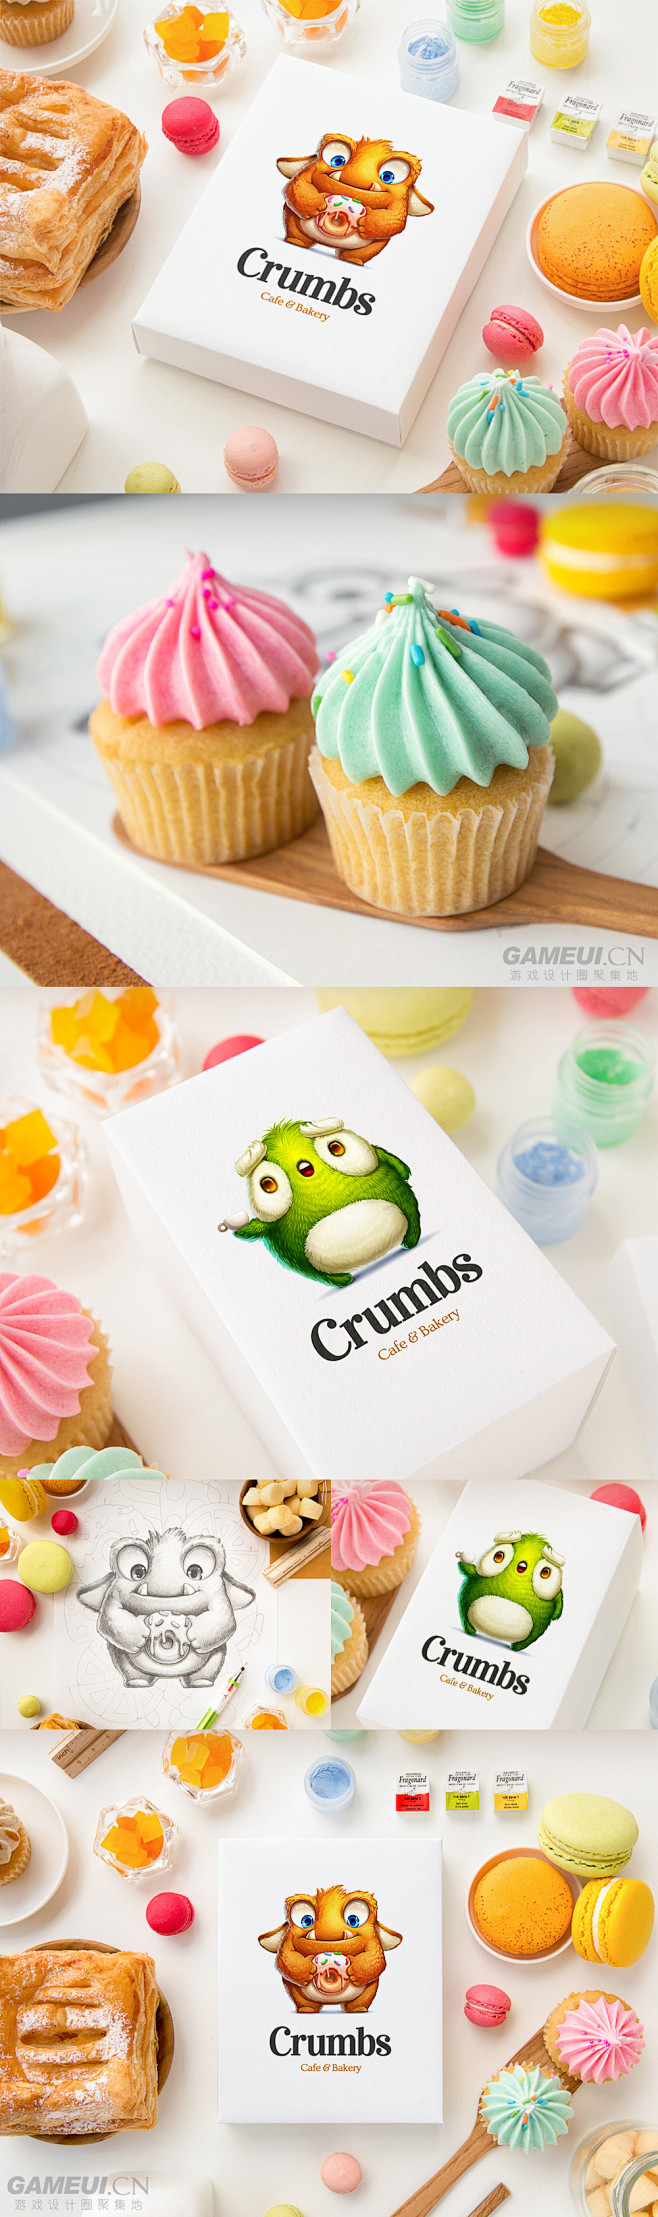 “Crumbs” Cafe & Bake...